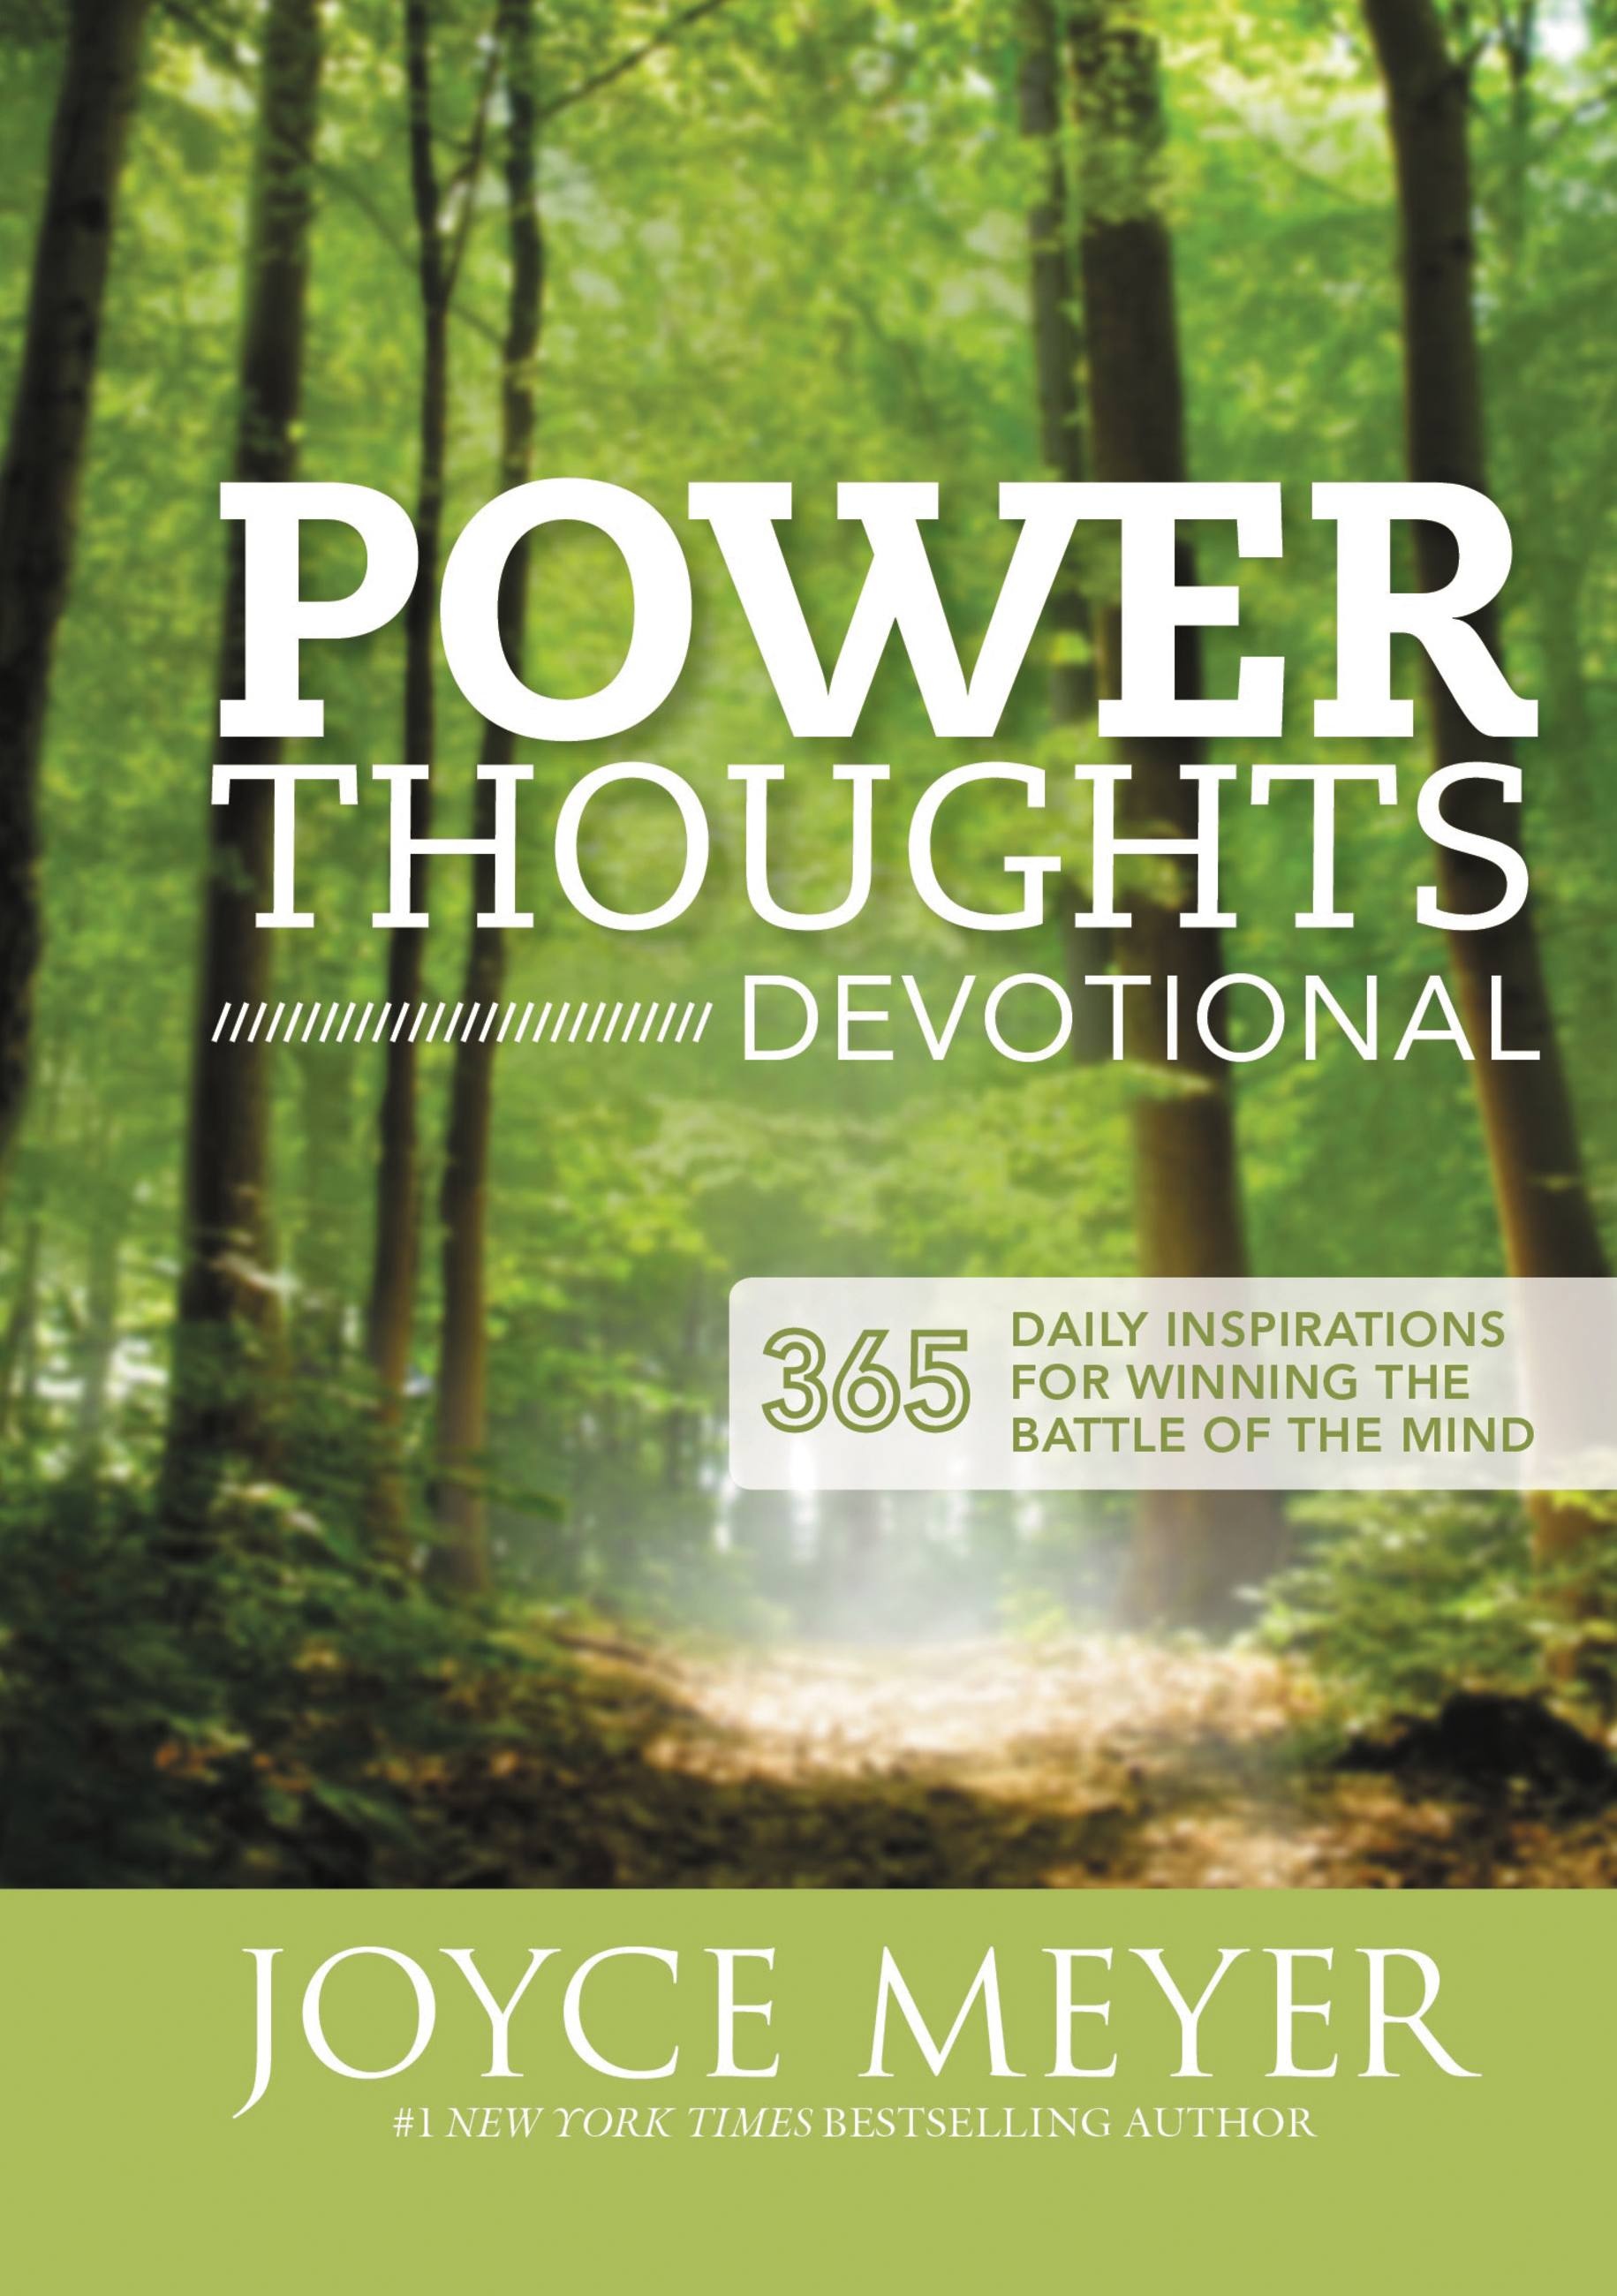 DOWNLOAD PDF: Power Thoughts Devotional by Joyce Meyer 19